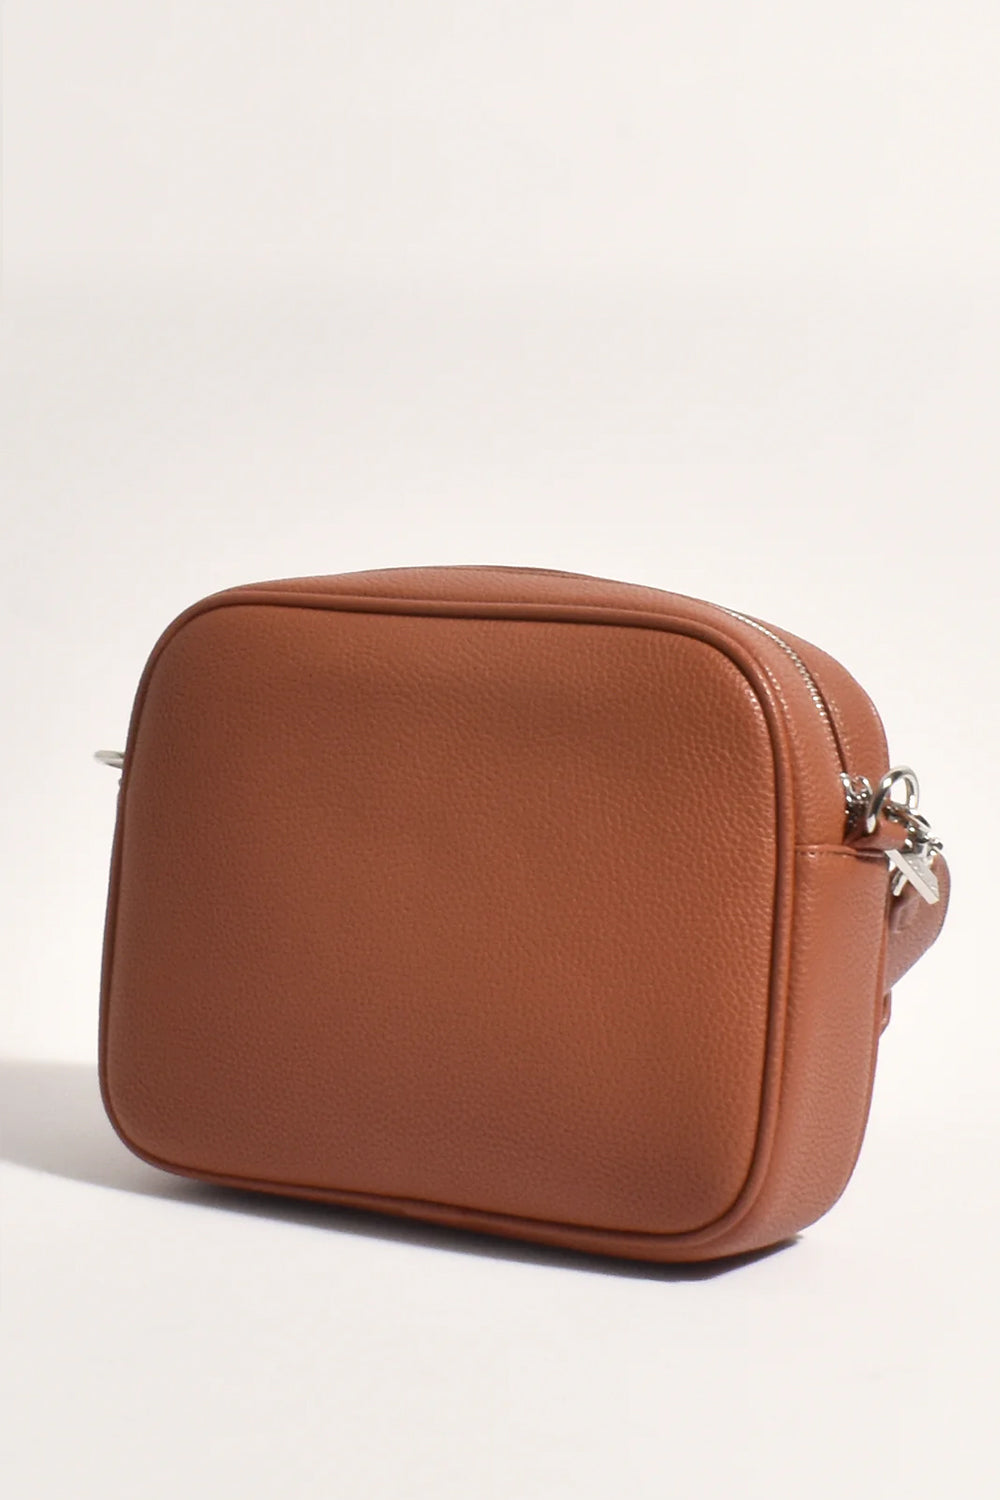 Adorne Paloma Weave Contrast Trim Camera Bag Tan/Natural